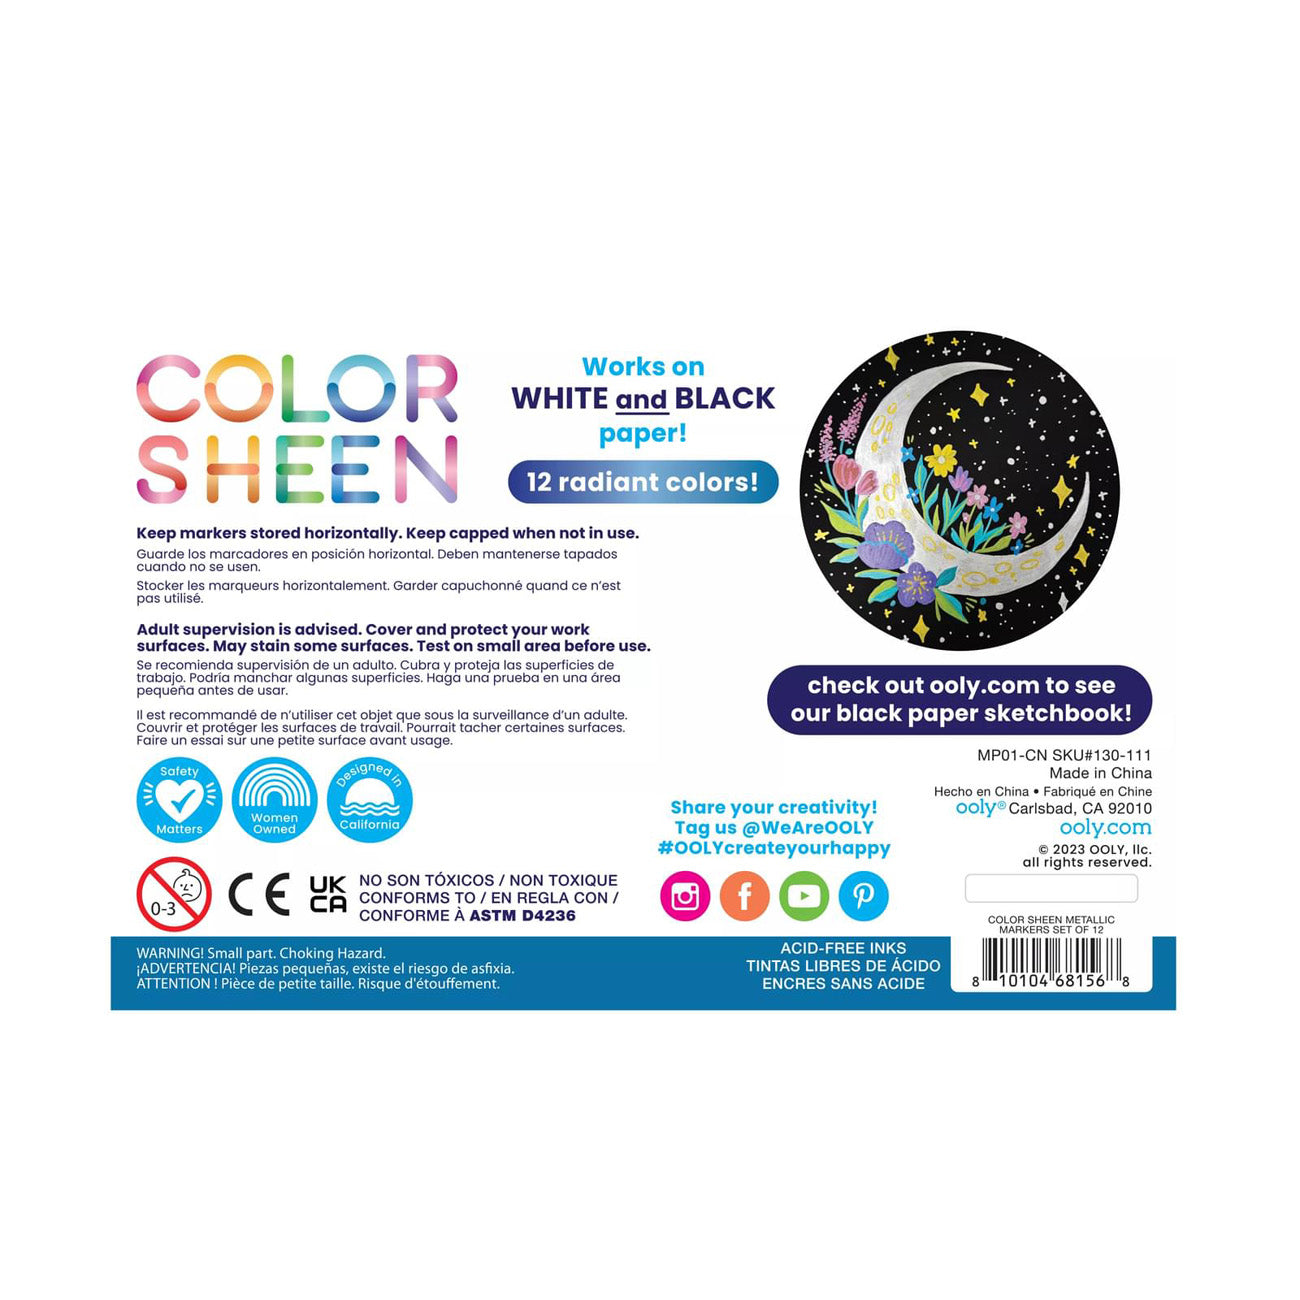 Ooly Color Sheen Metallic-Marker